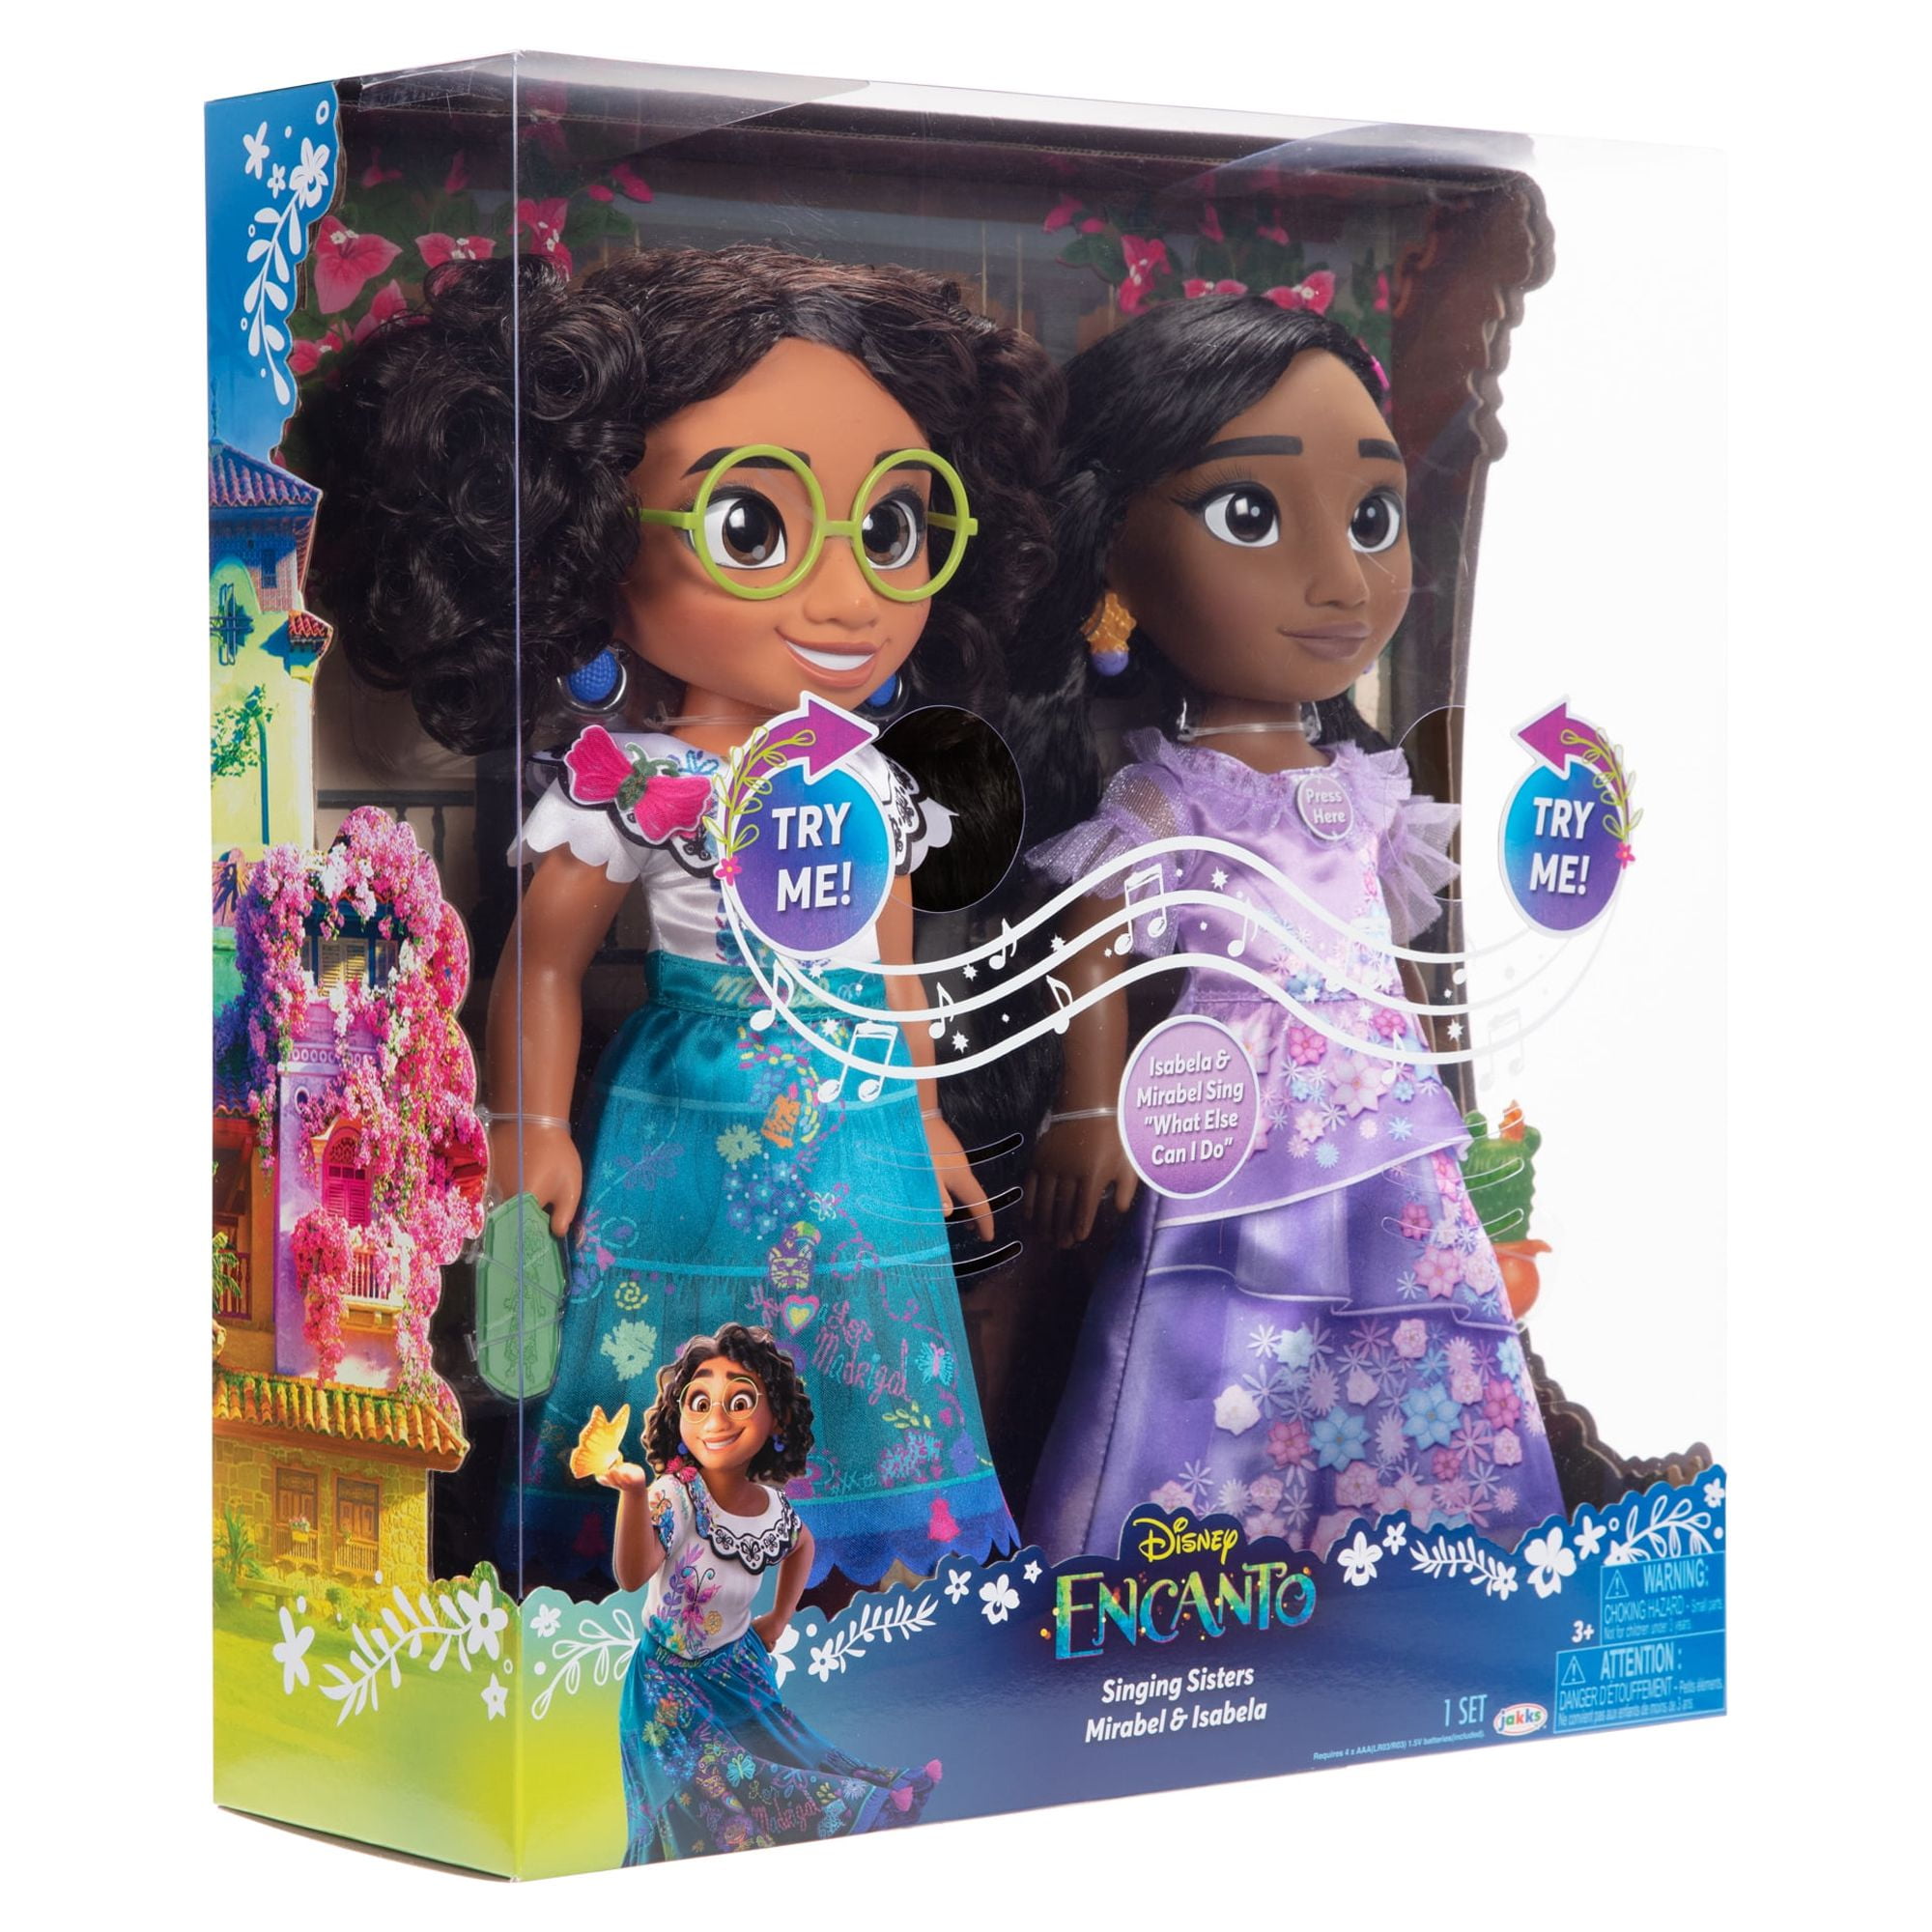 Disney Encanto Singing Sisters Mirabel & Isabela Doll Set Can be